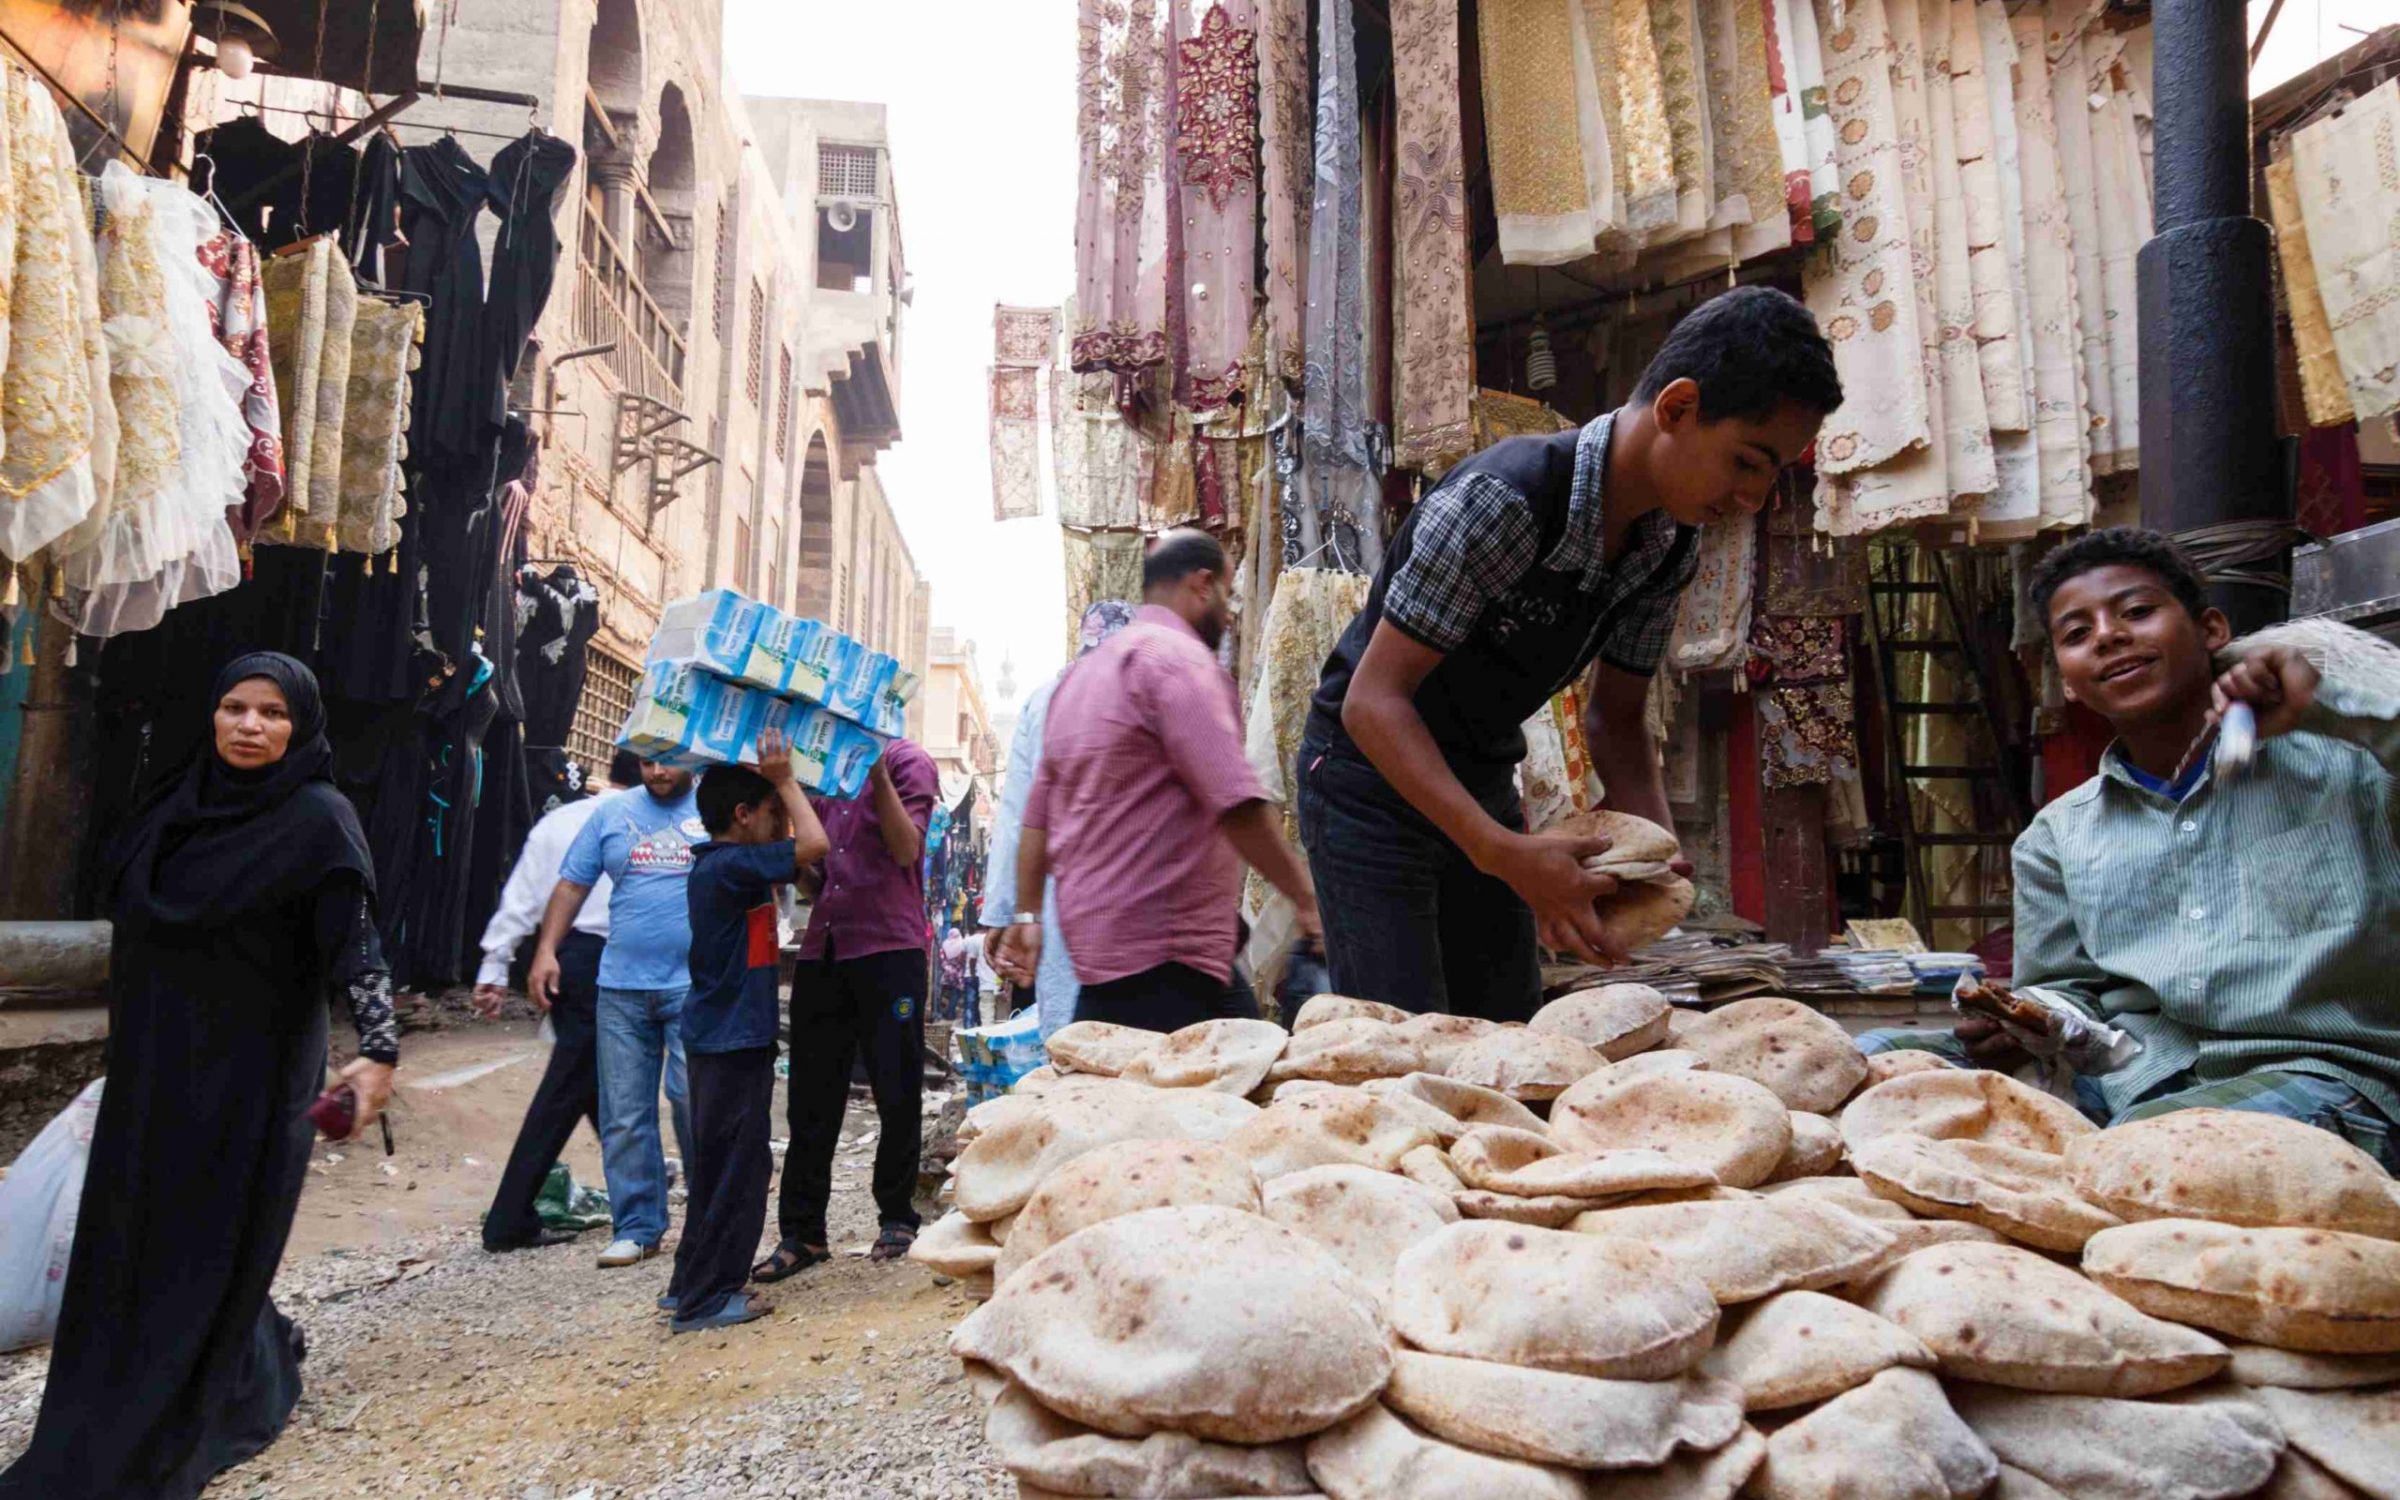 Bazaar street scene with child selling bread. Islamic Cairo, Egypt